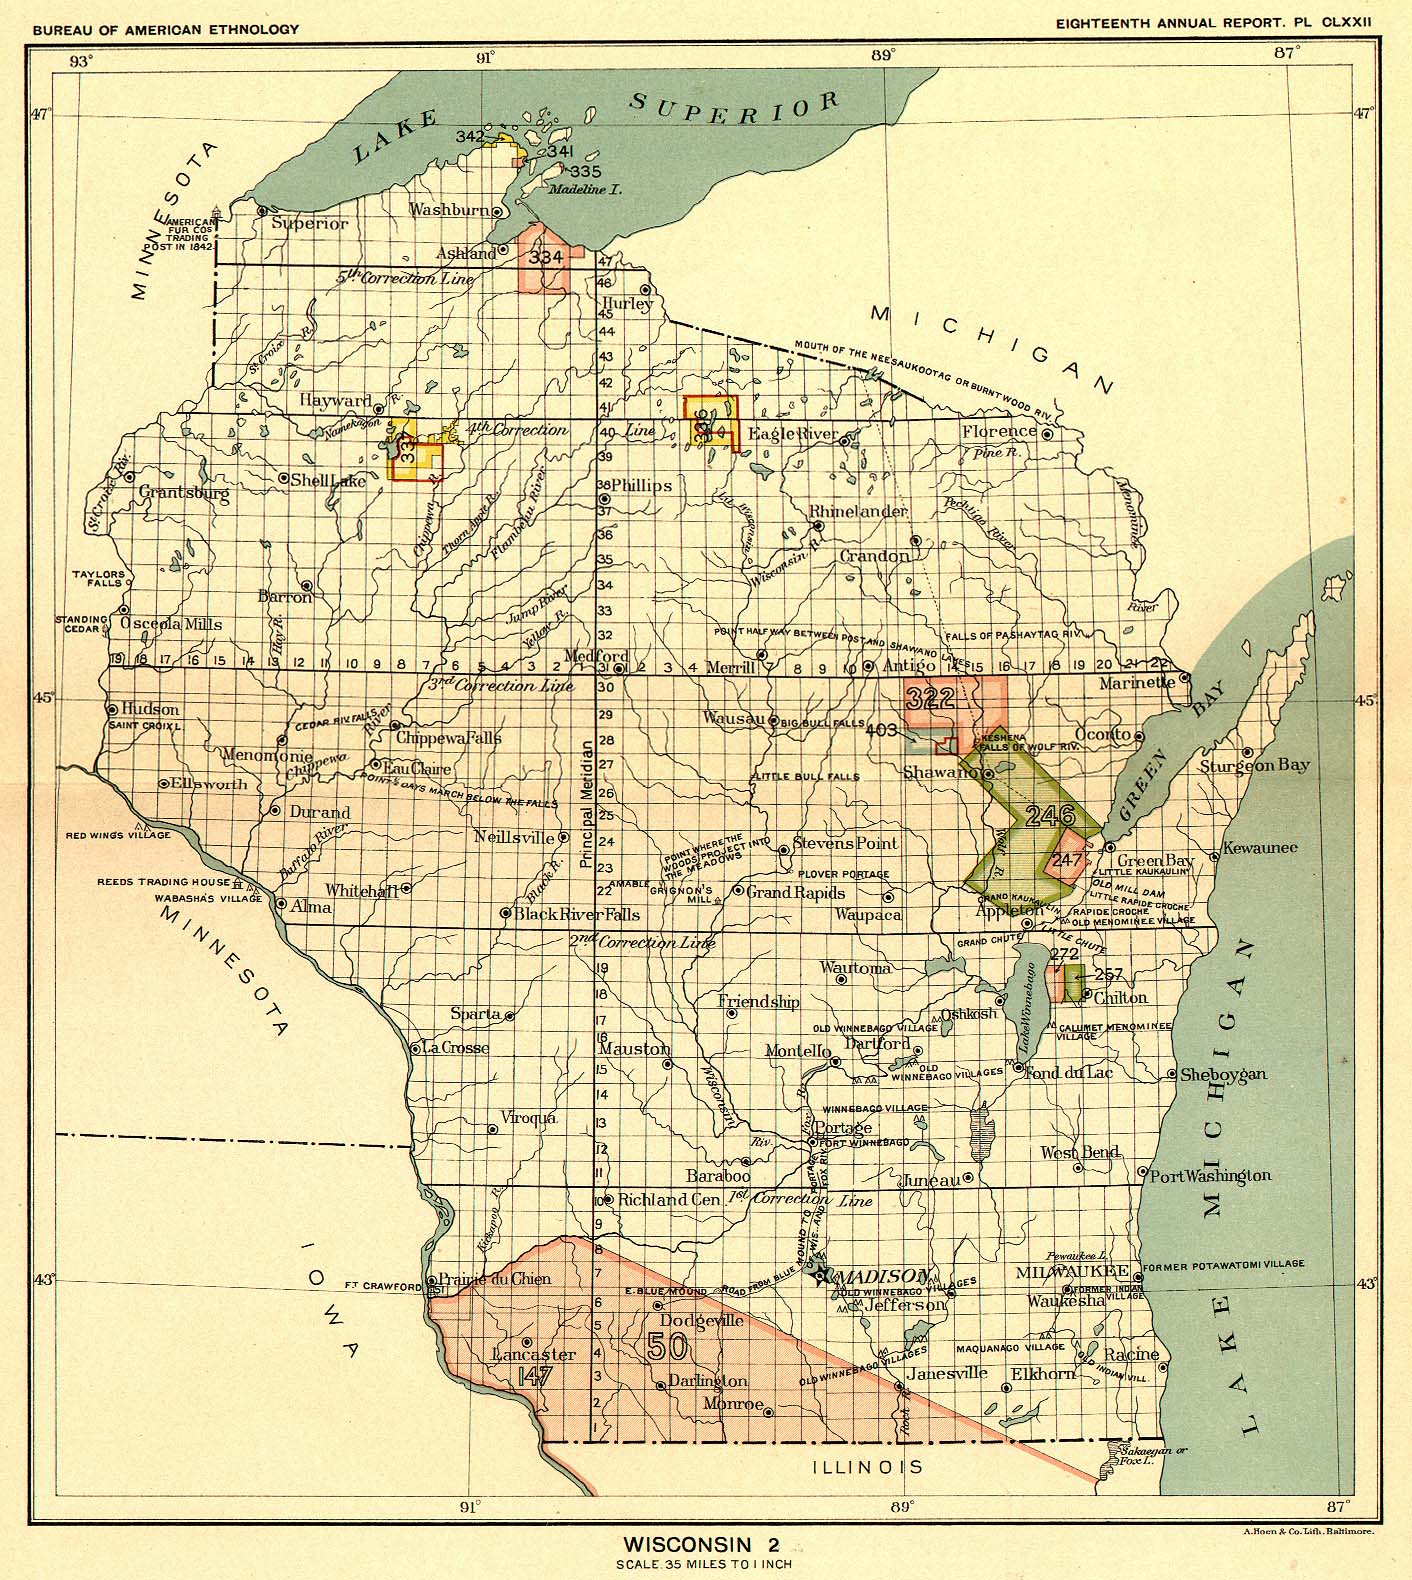 Wisconsin 2, Map 65